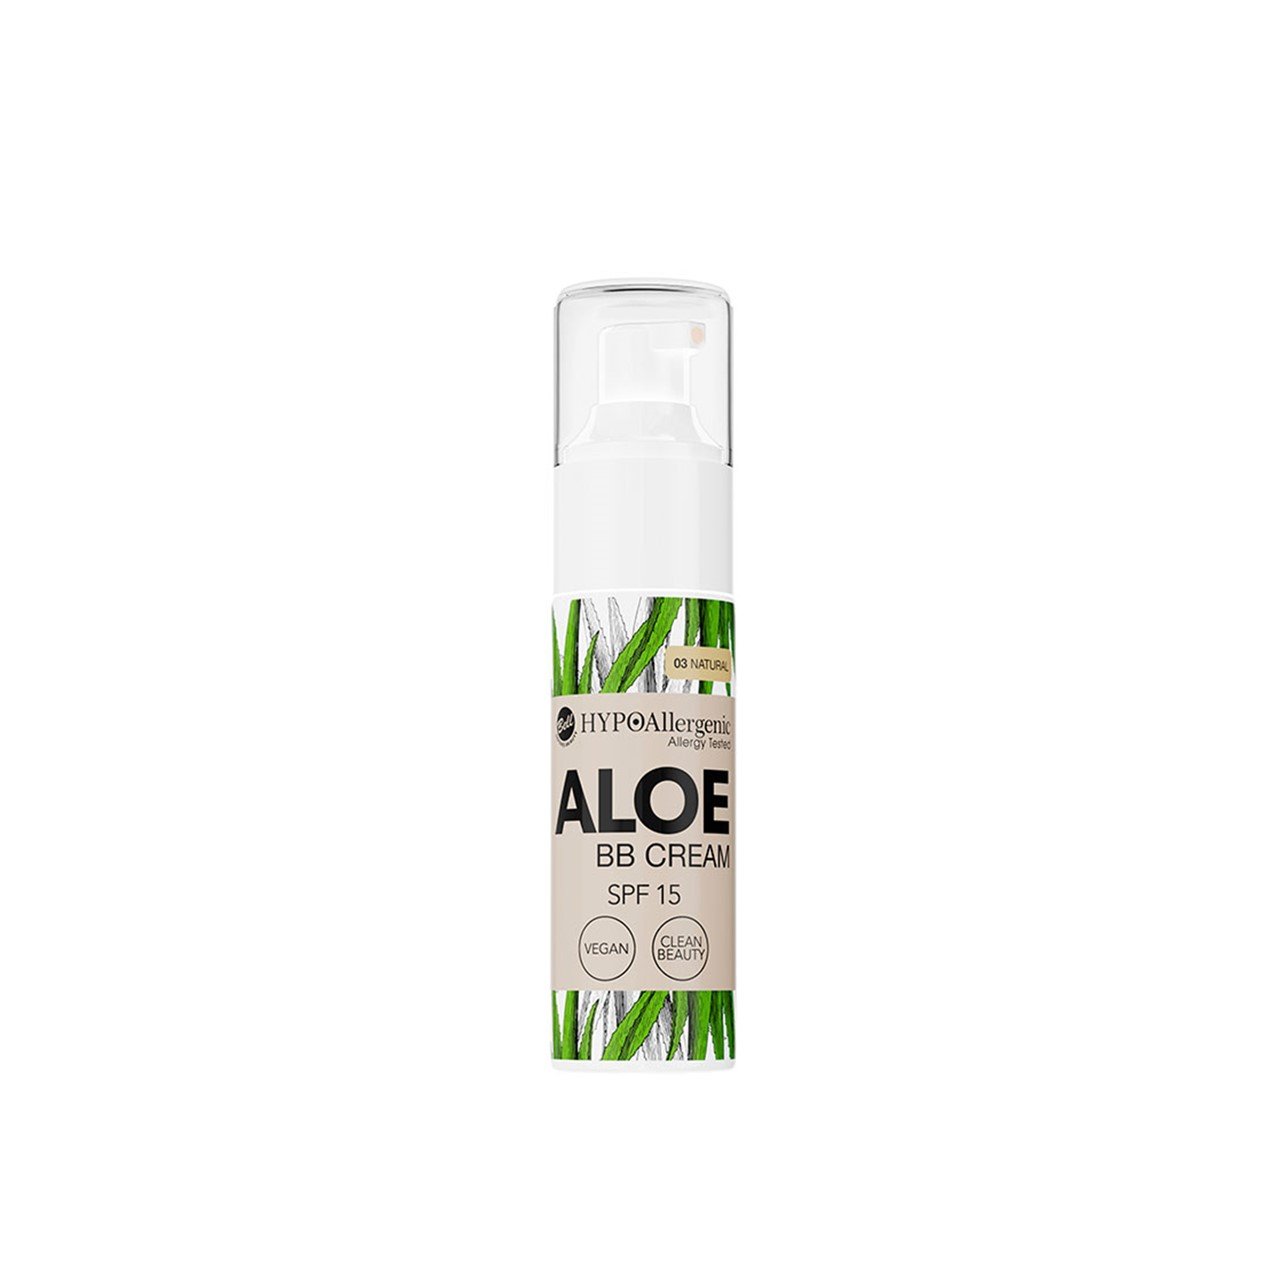 Bell HYPOAllergenic Aloe BB Cream SPF15 03 Natural 20g